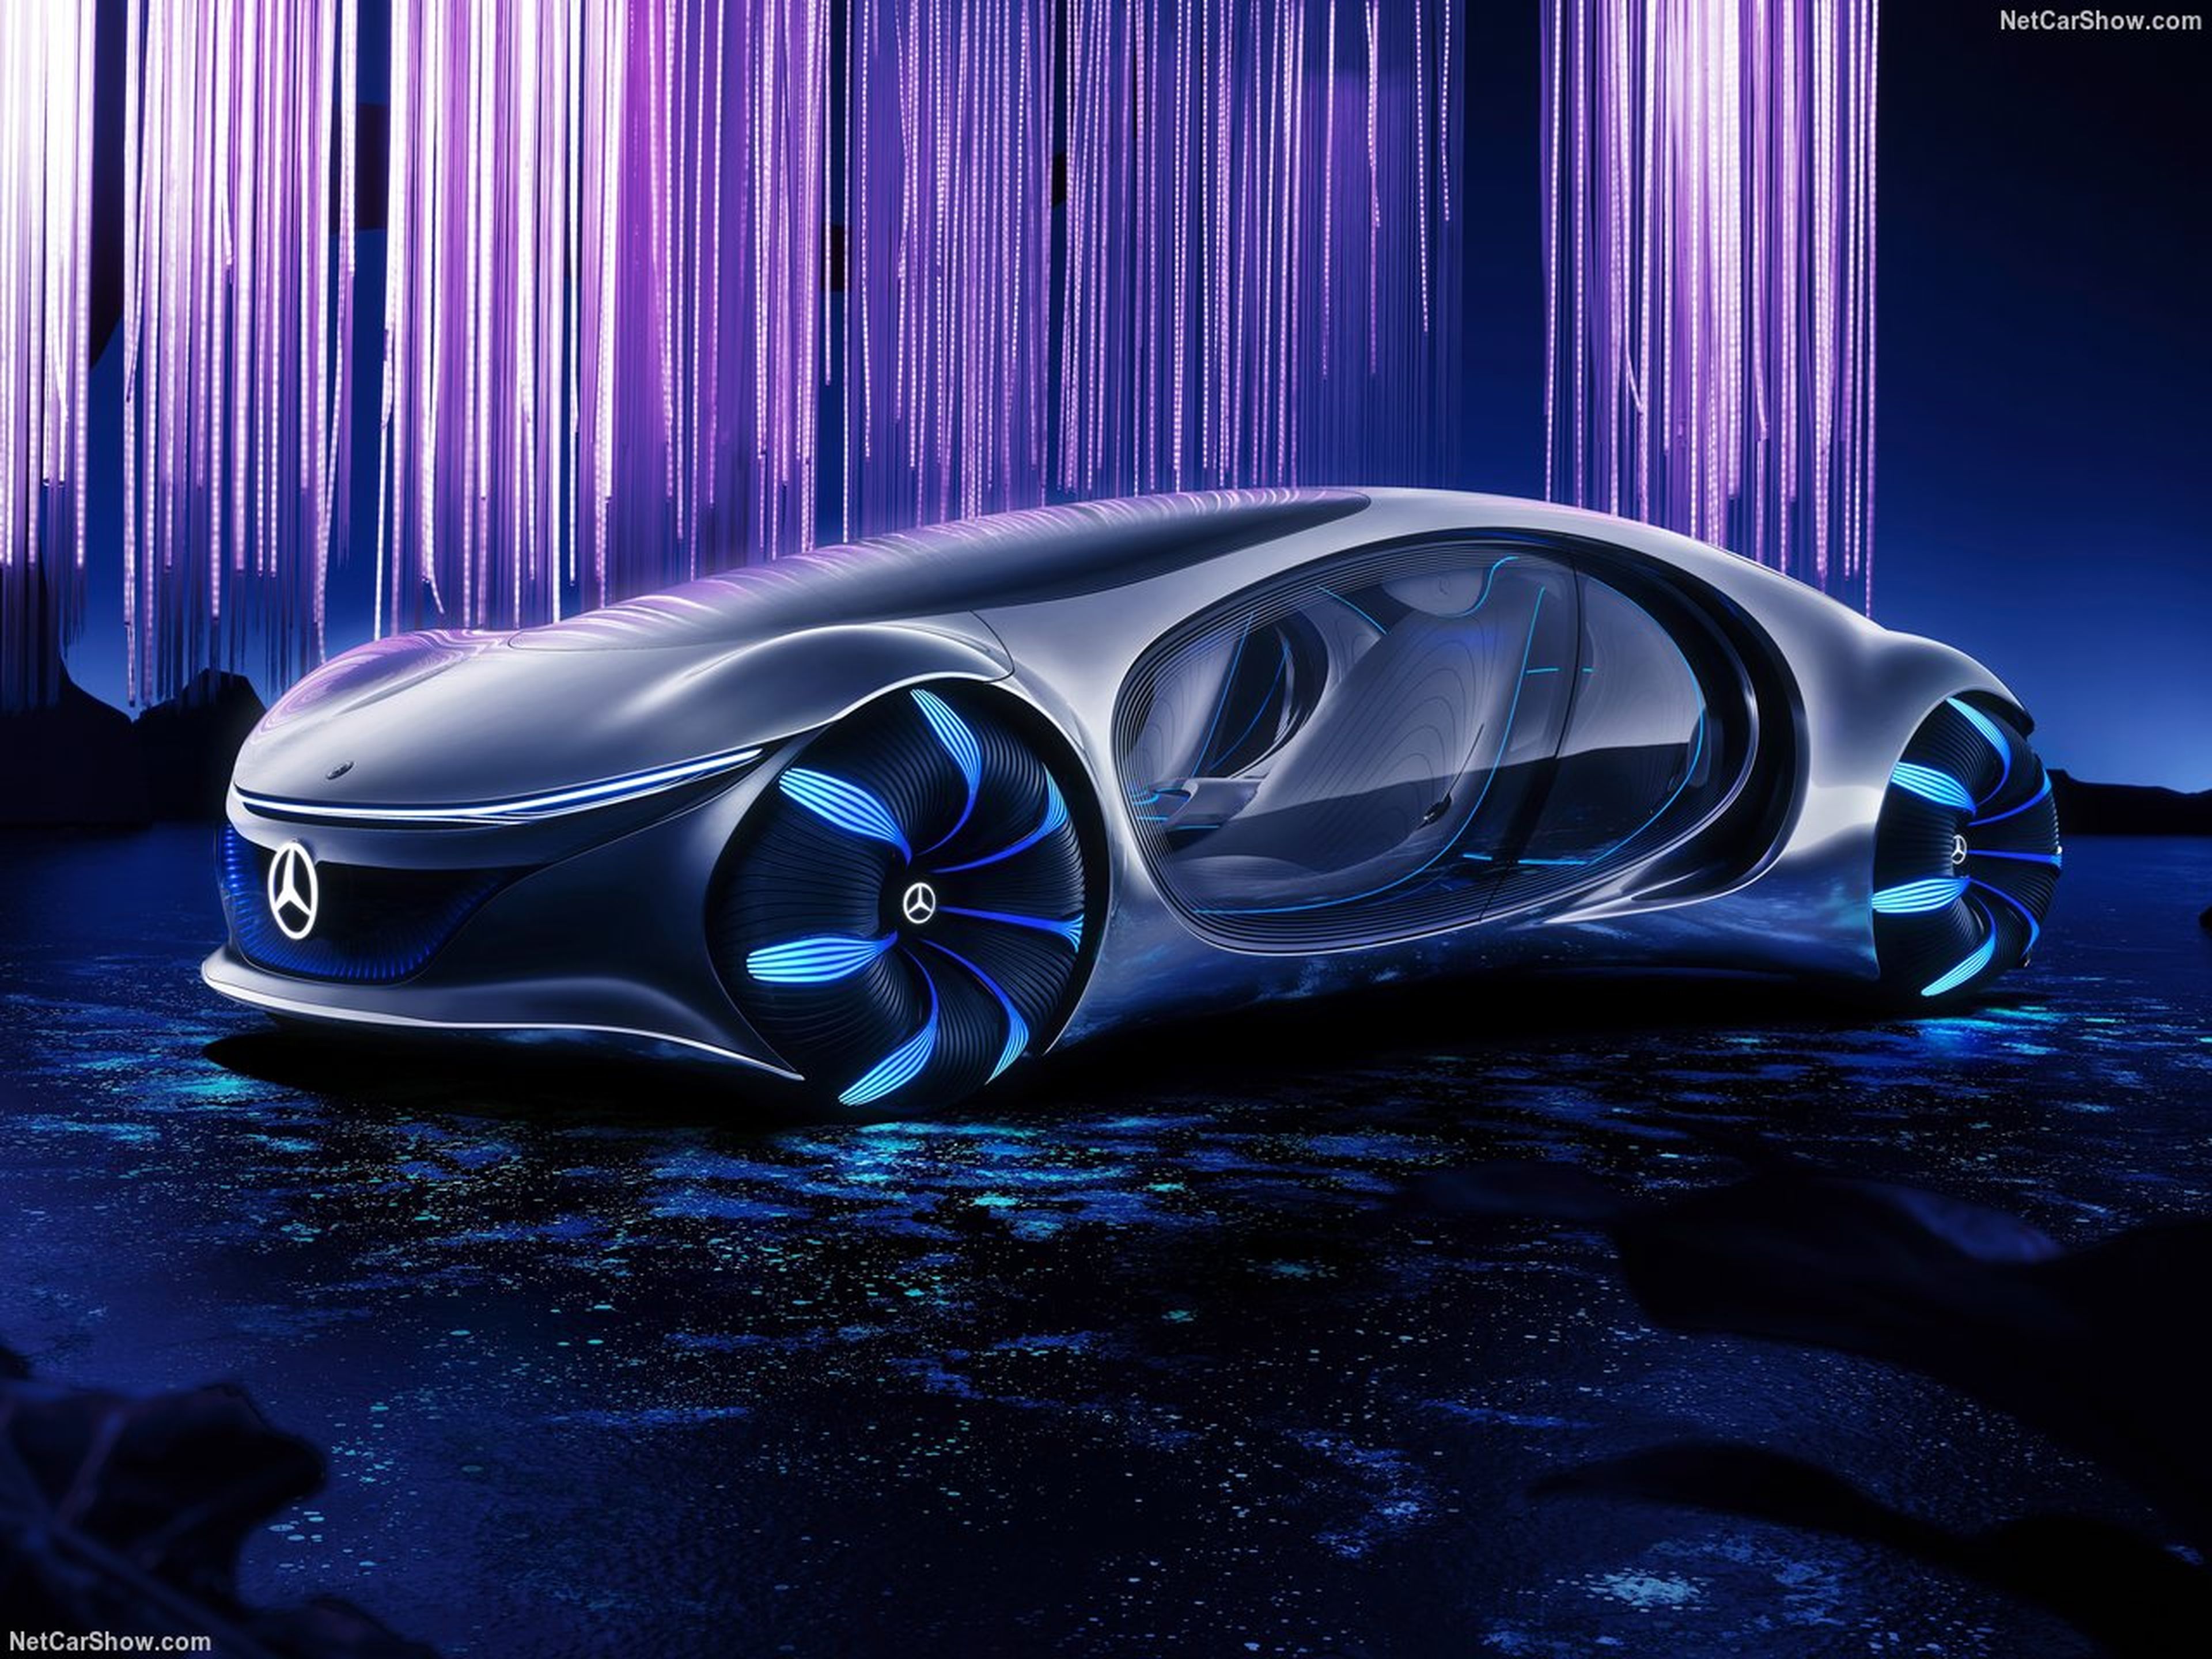 VÍDEO: Mercedes-Benz Vision Avtr Concept, basado en la película Avatar